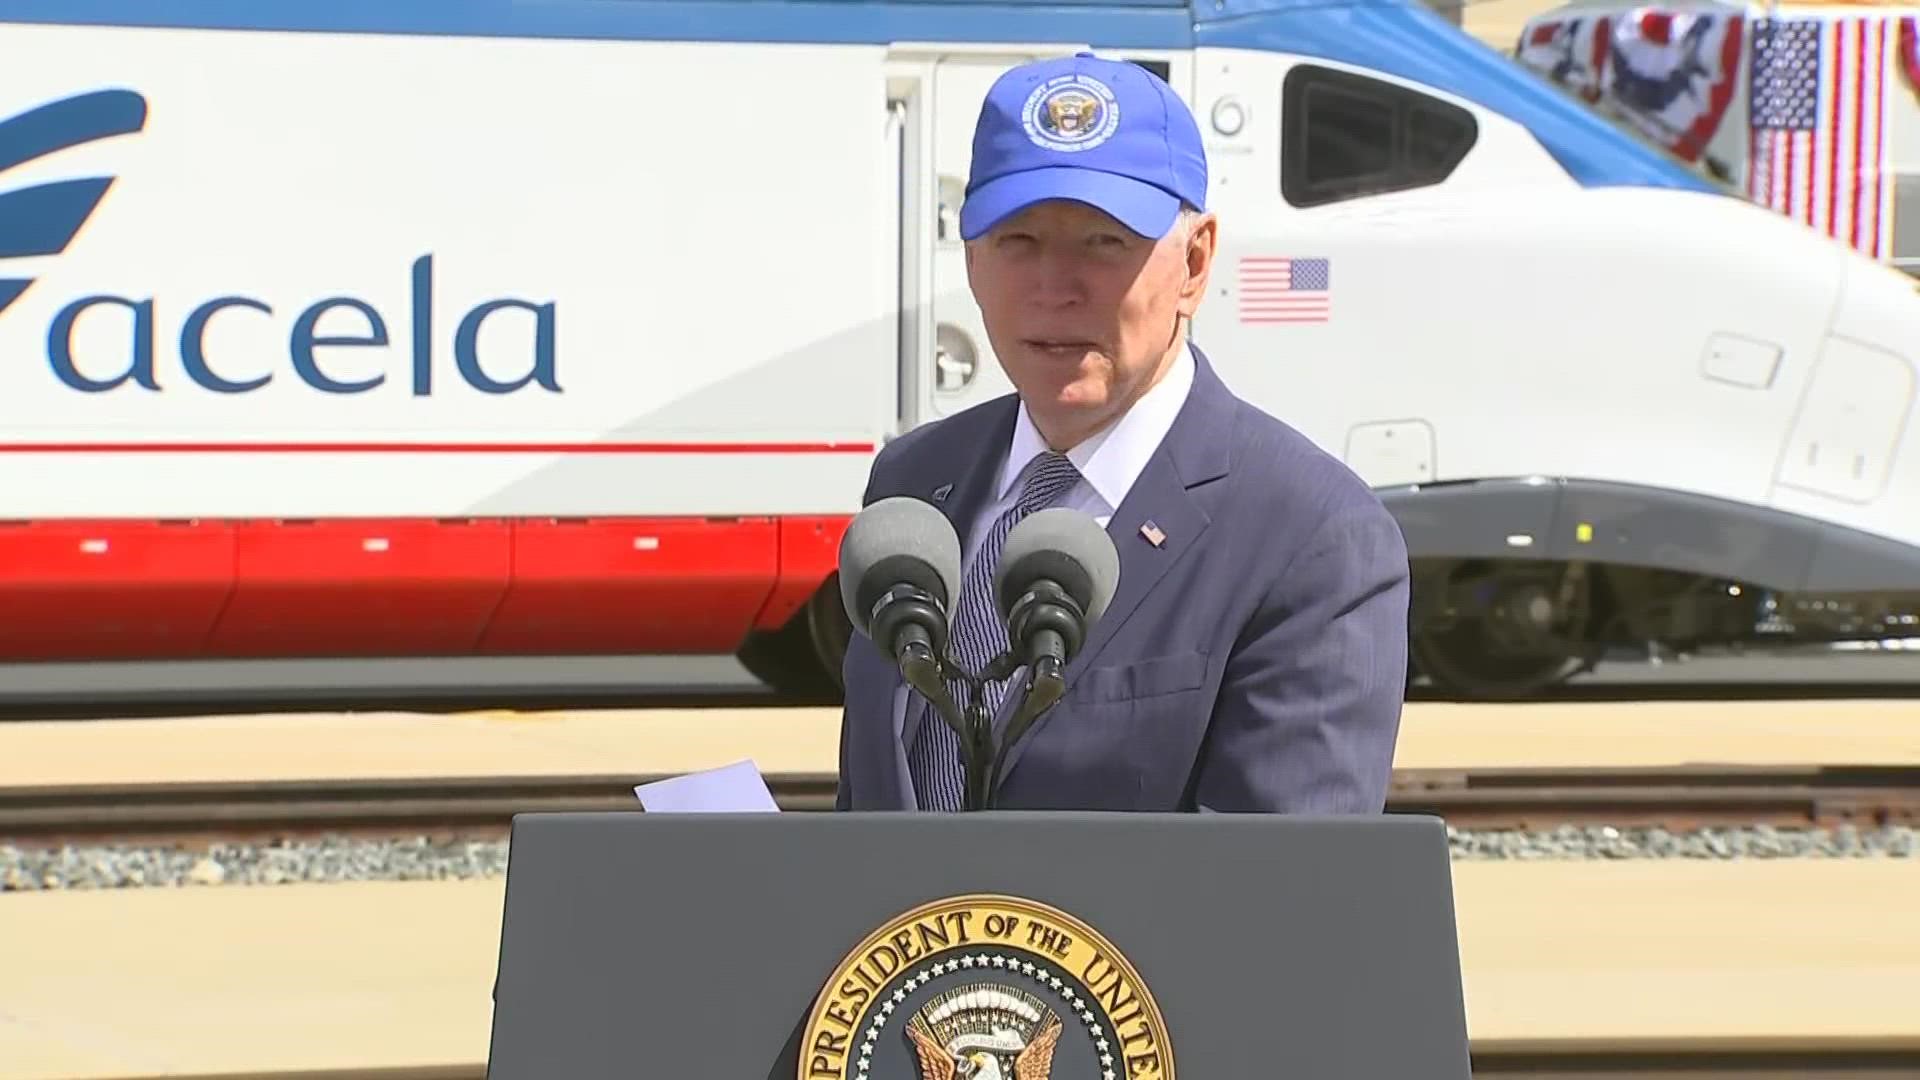 President Joe Biden celebrates Amtrak's 50th anniversary during an event in Philadelphia. Biden used Amtrak to commute from Washington to Delaware as a US Senator.